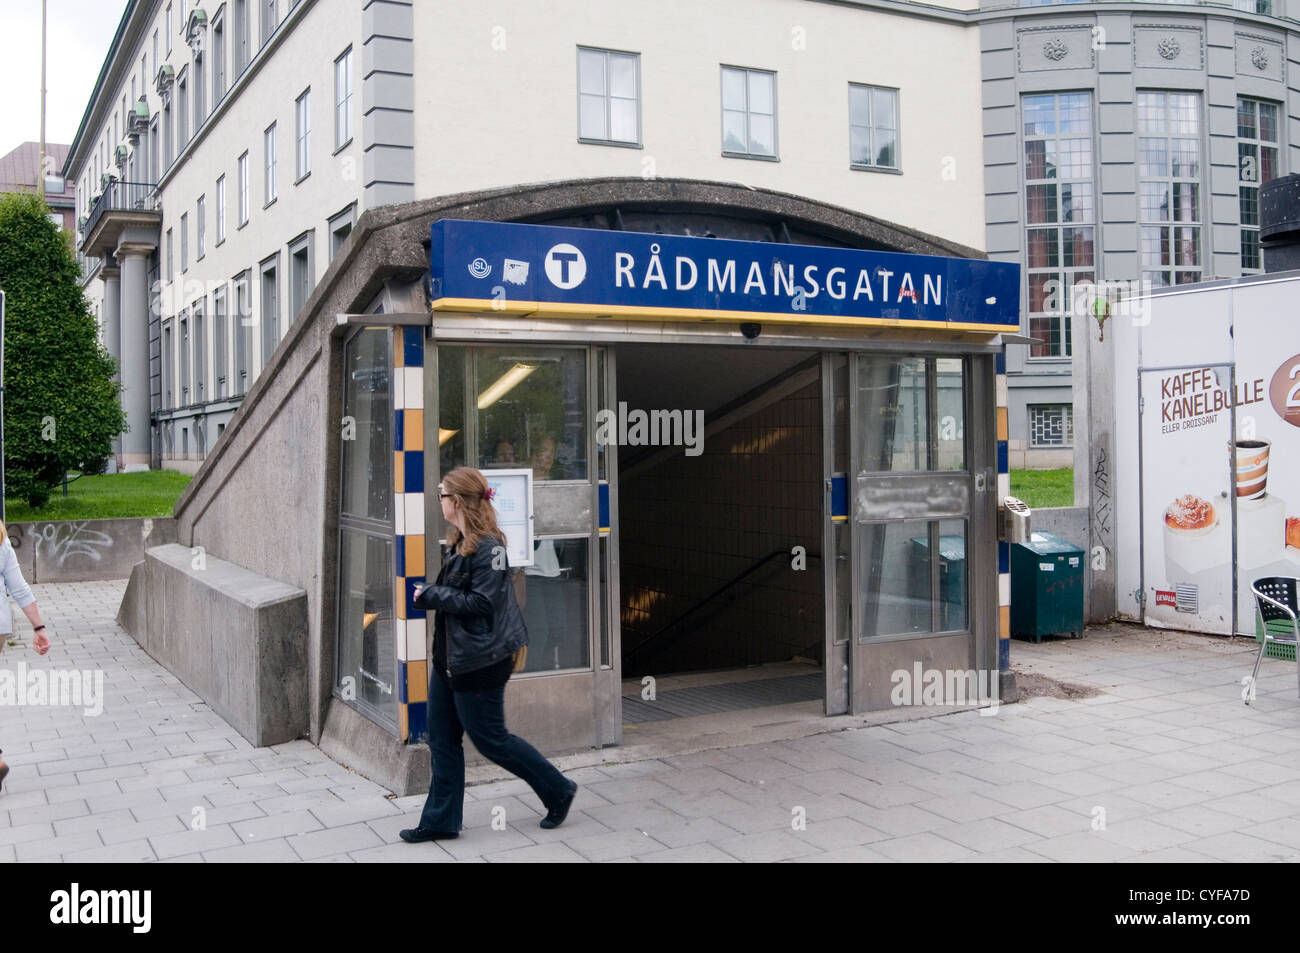 stockholm underground station system railway radmansgatan stations sweden swedish subway tube Stock Photo